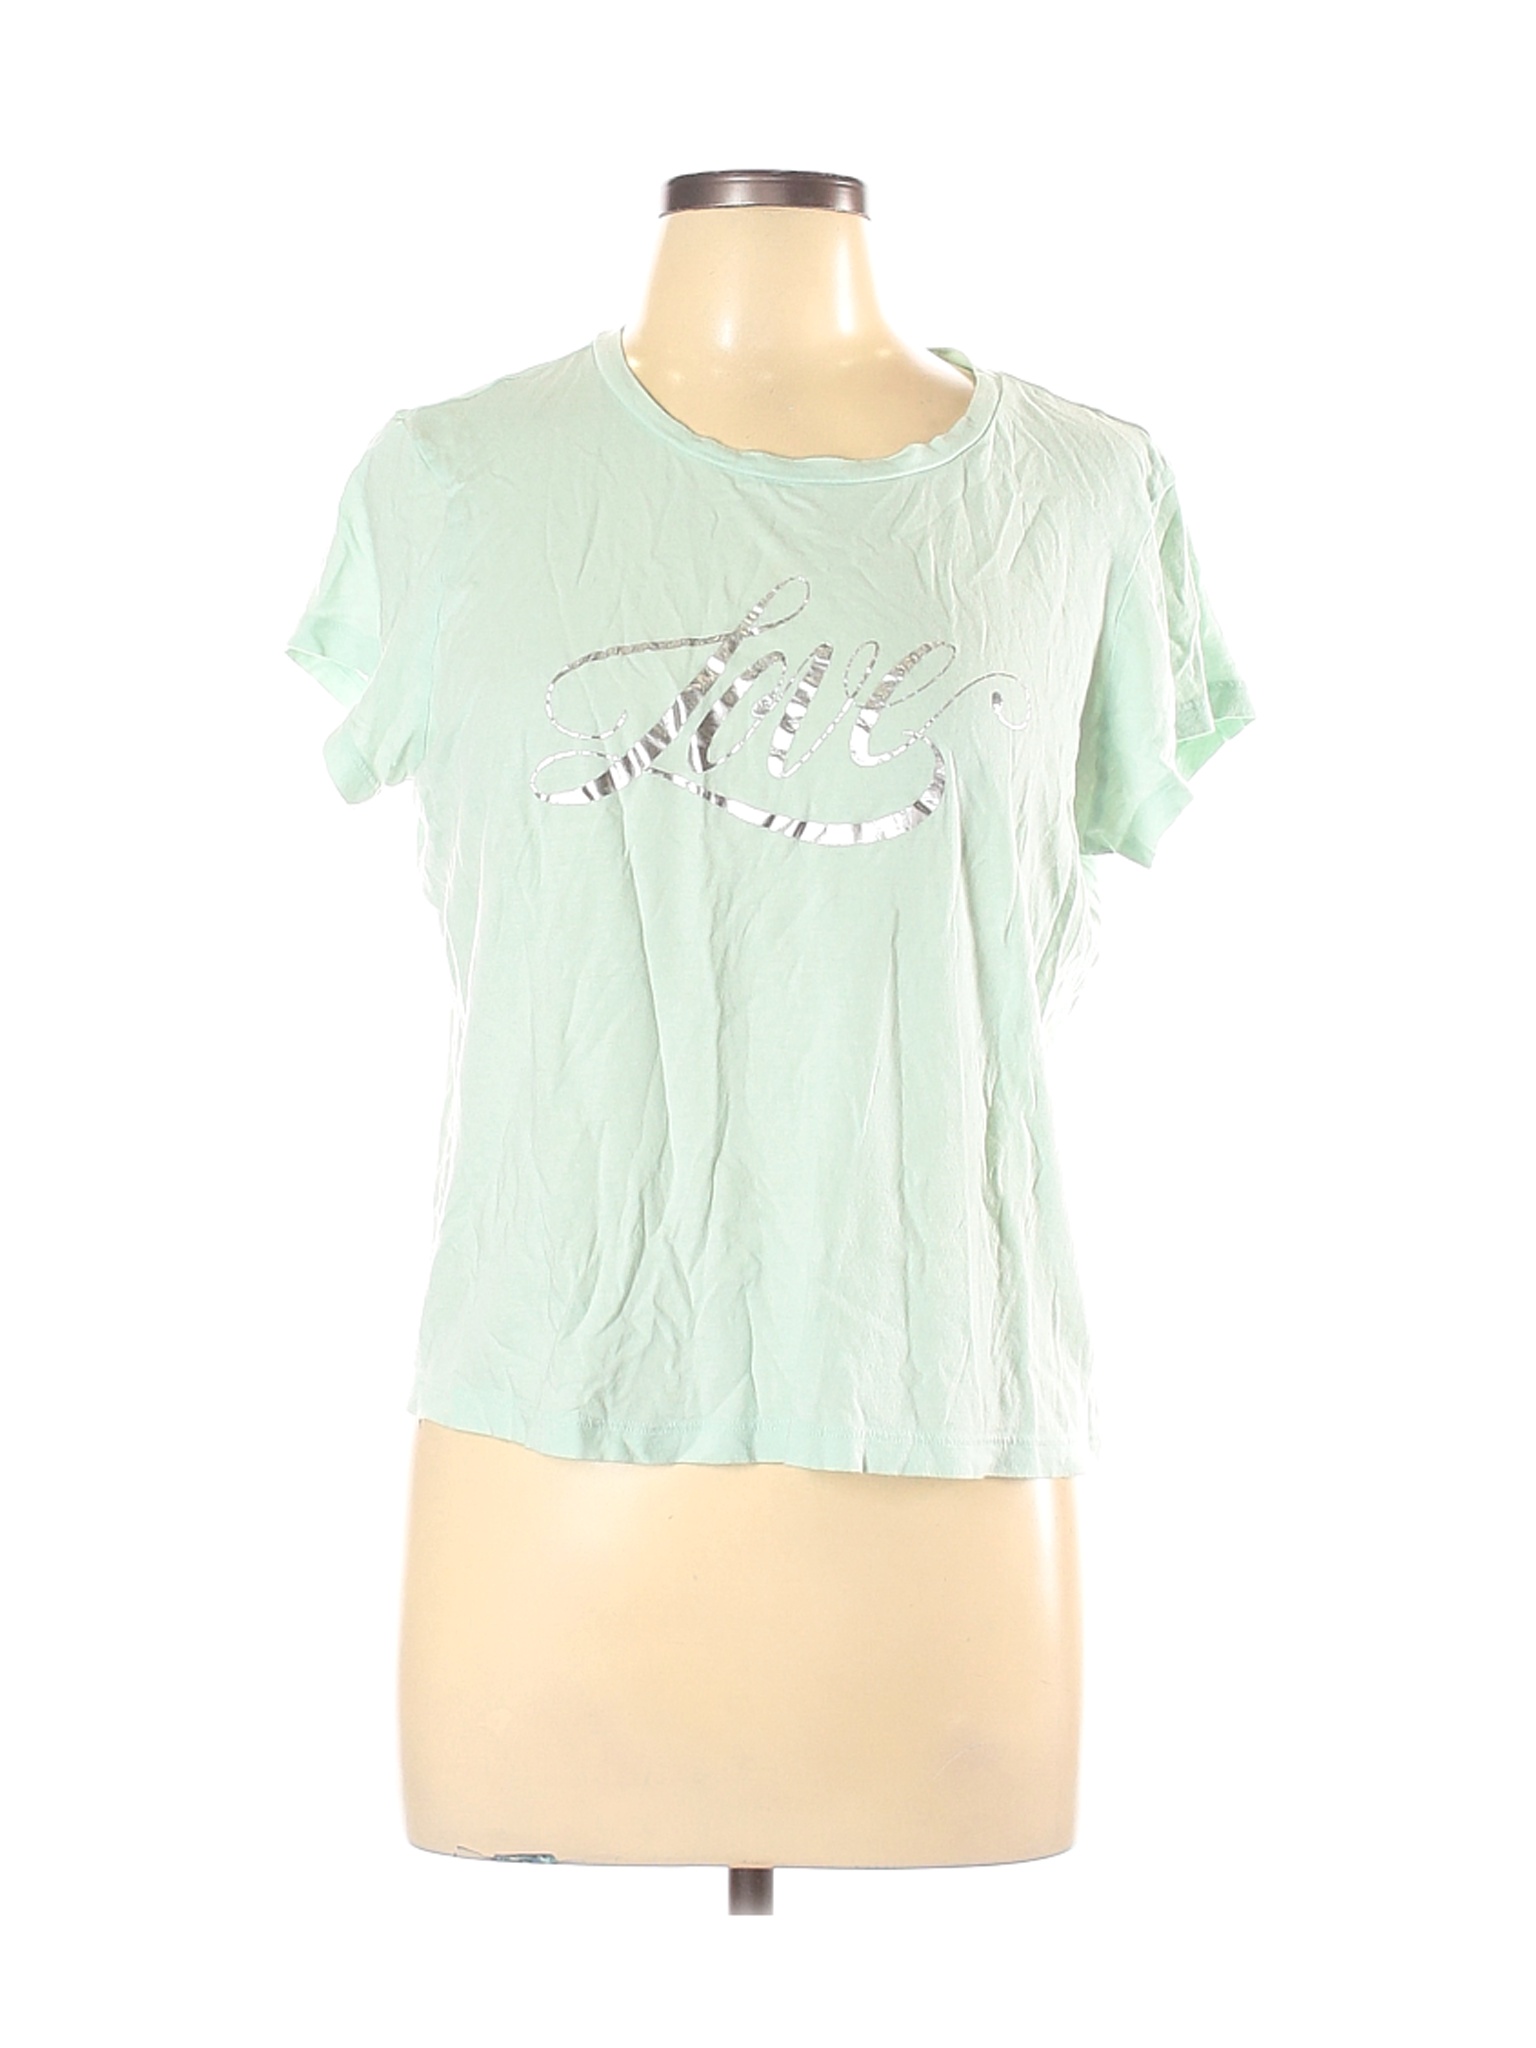 Victoria's Secret Women Green Short Sleeve T-Shirt L | eBay